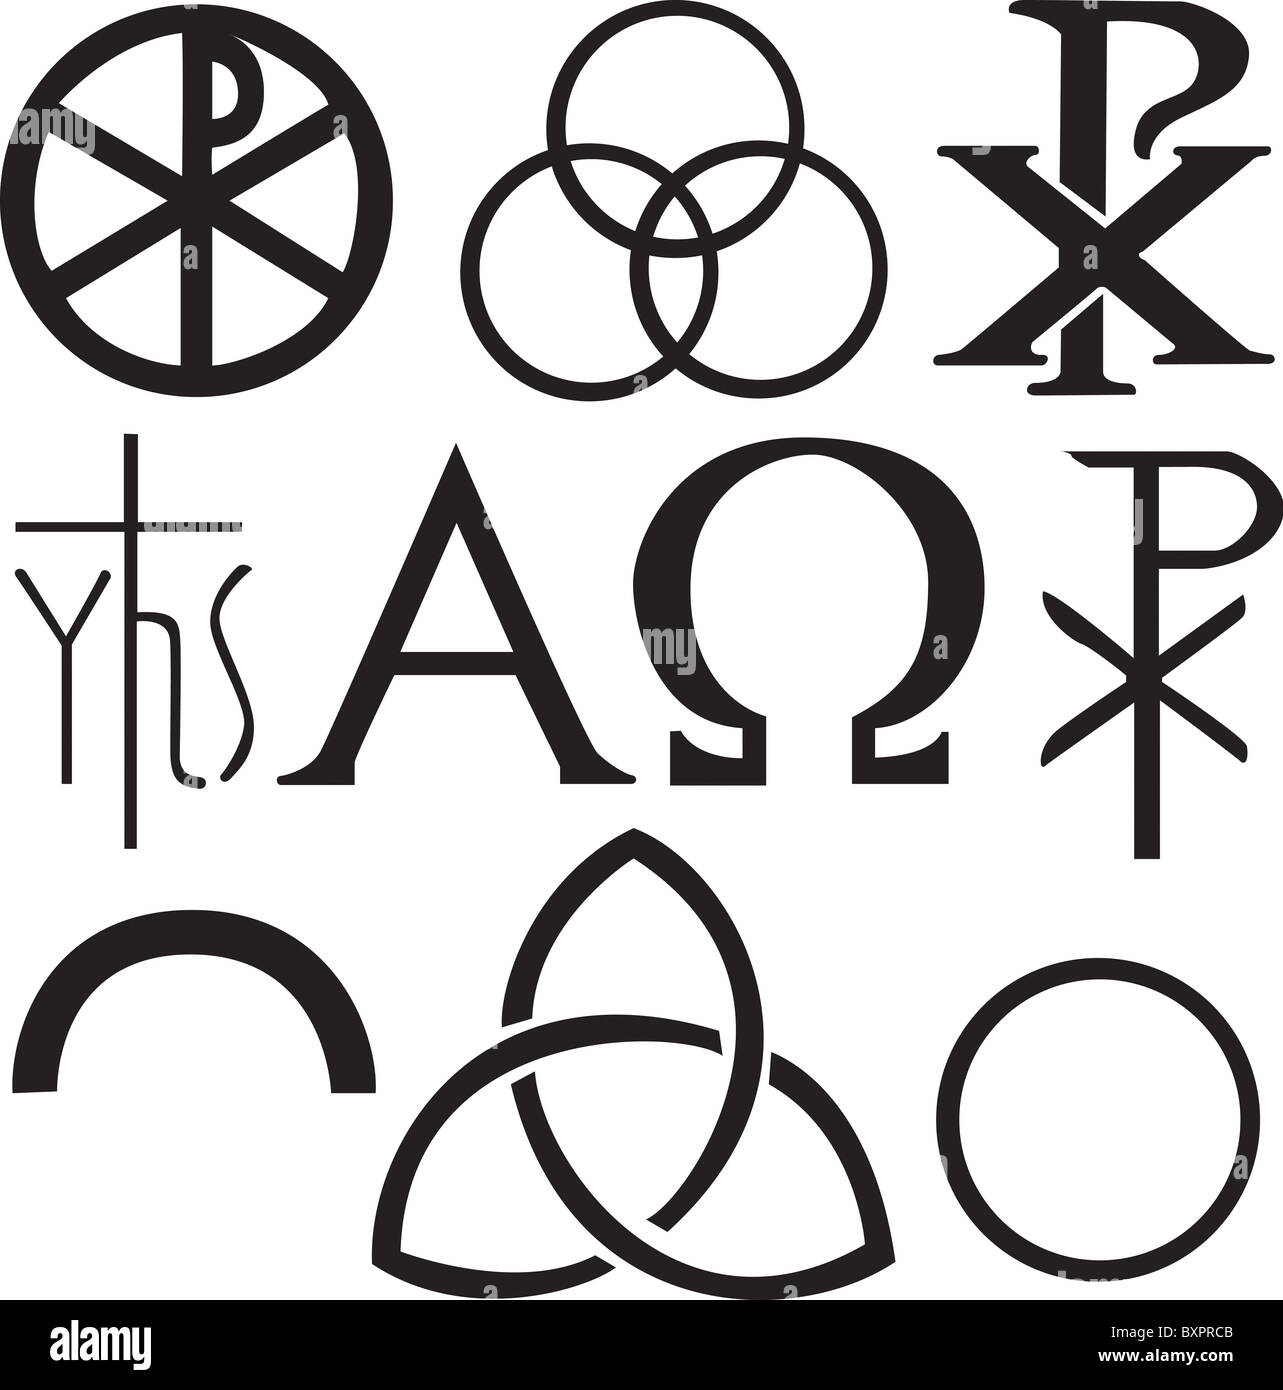 A set of religious Christian symbols. Stock Photo